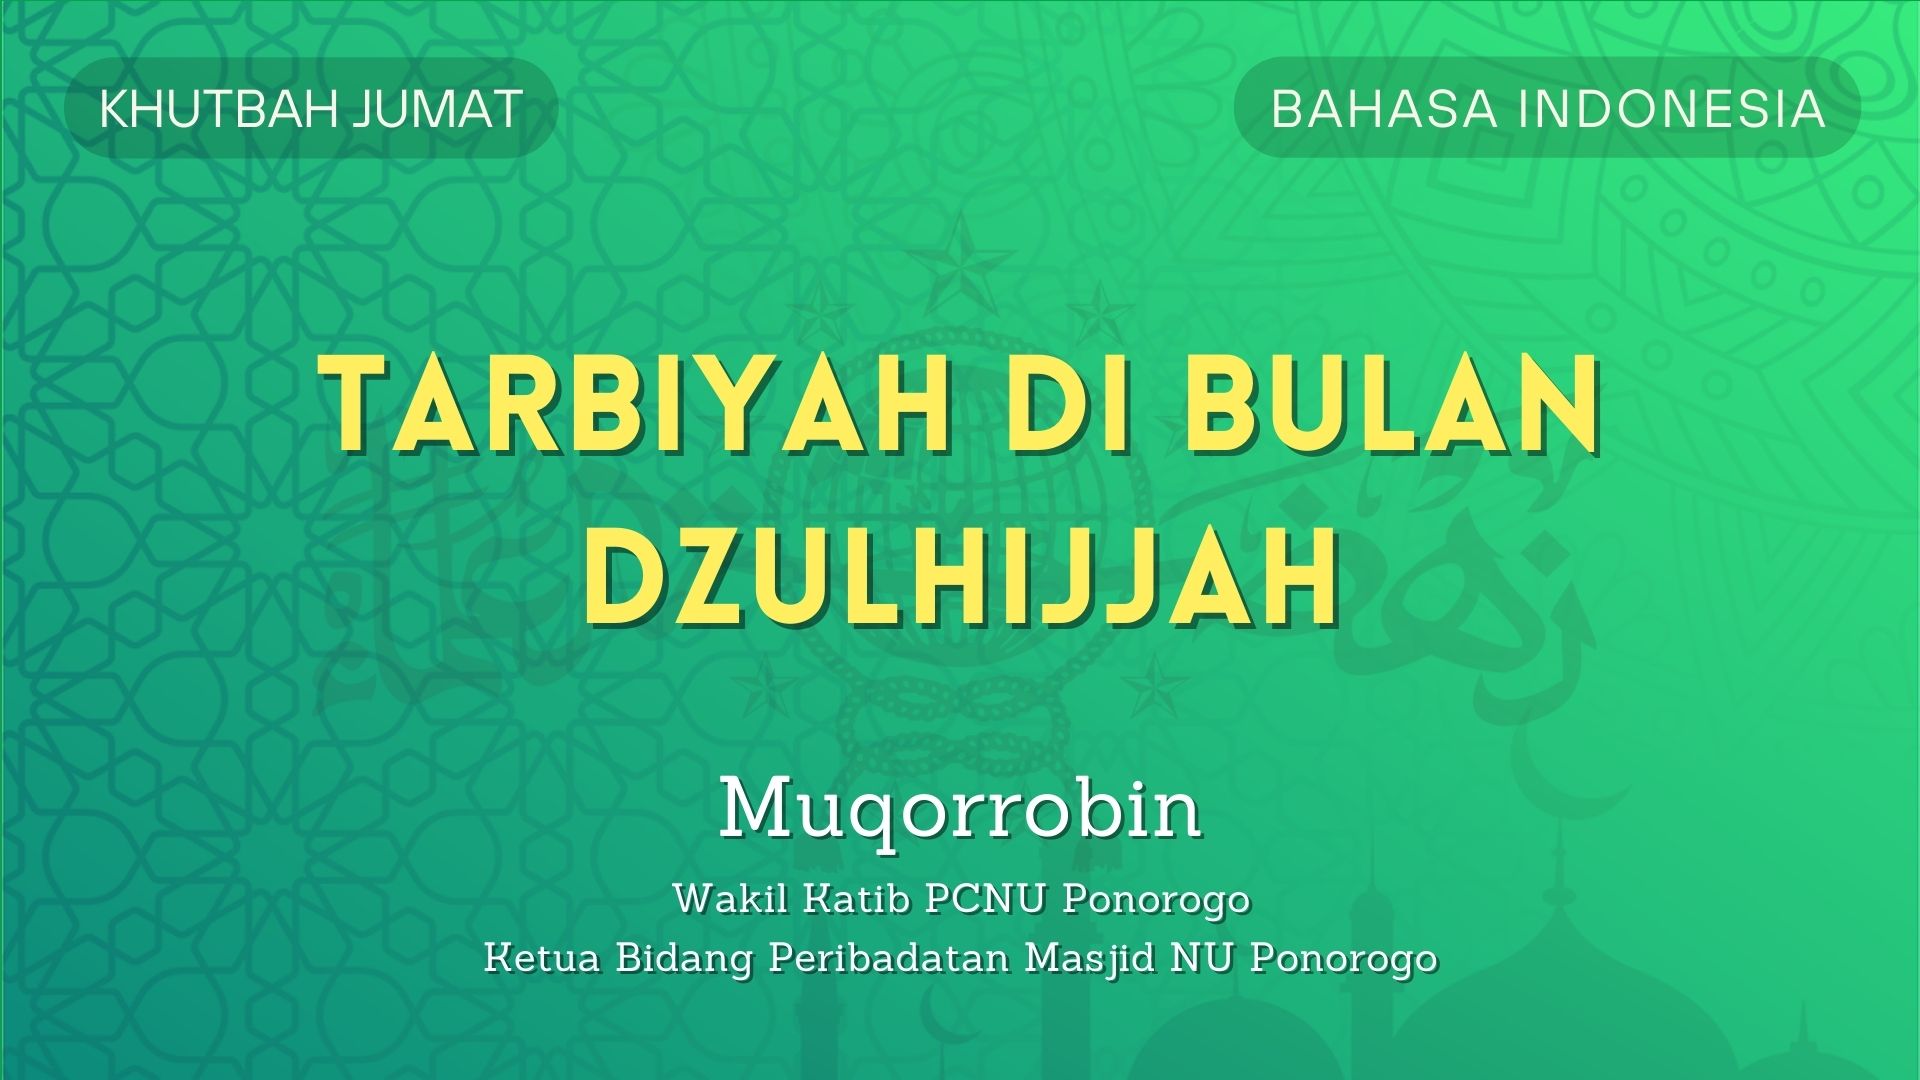 Khutbah Jumat Singkat Bahasa Indonesia - Tarbiyah di Bulan Dzulhijjah